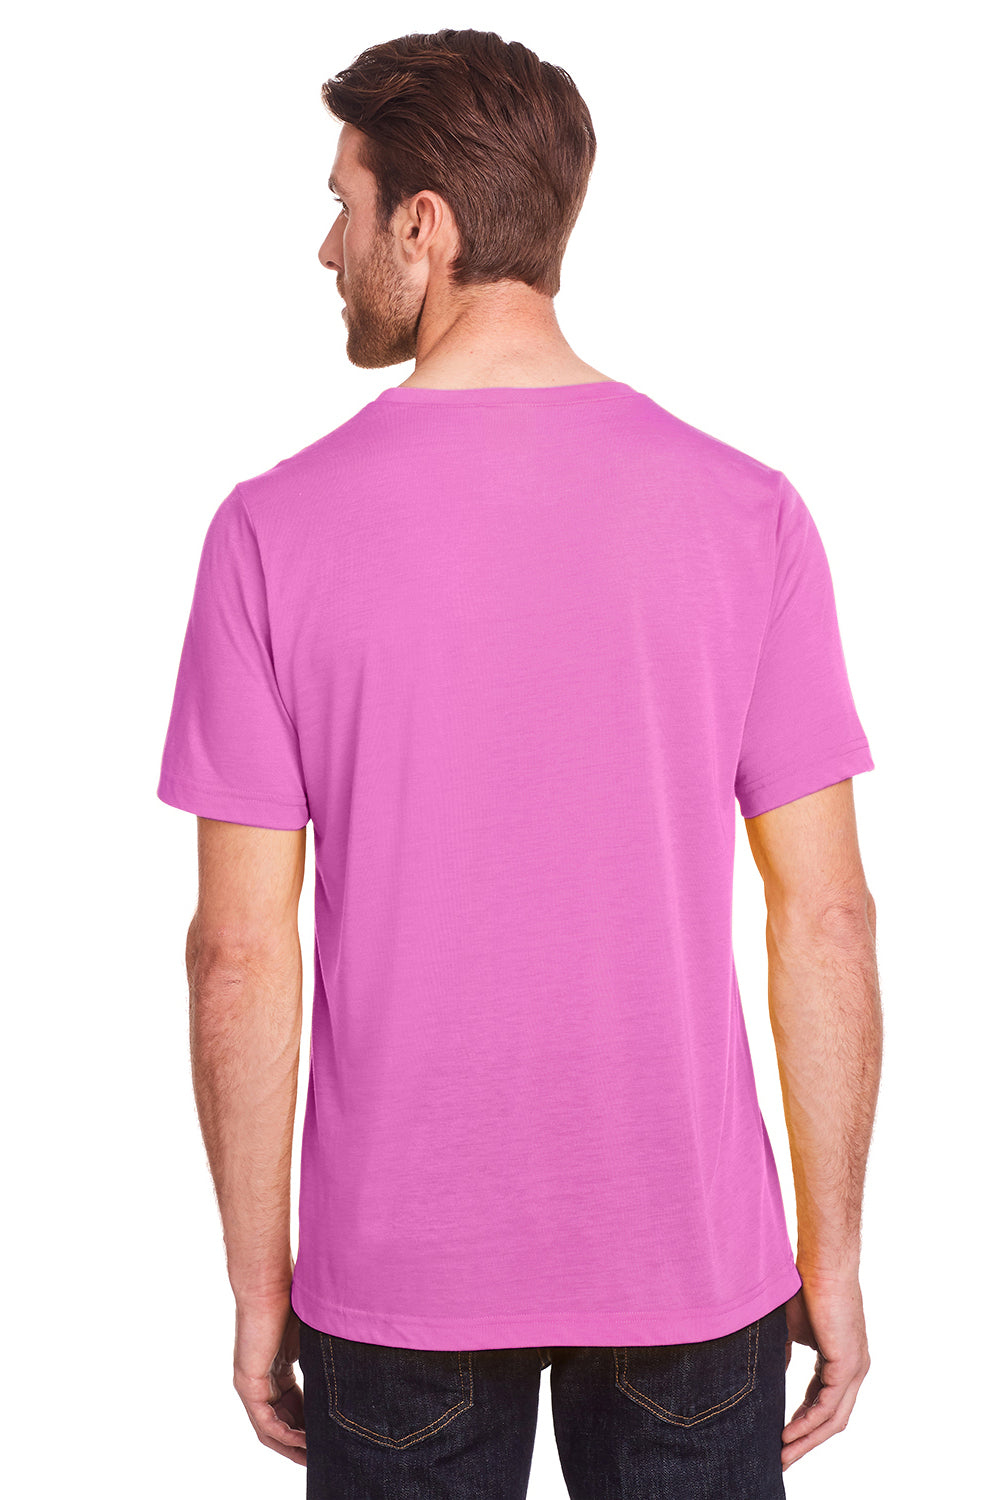 Core 365 CE111 Mens Fusion ChromaSoft Performance Moisture Wicking Short Sleeve Crewneck T-Shirt Charity Pink Back